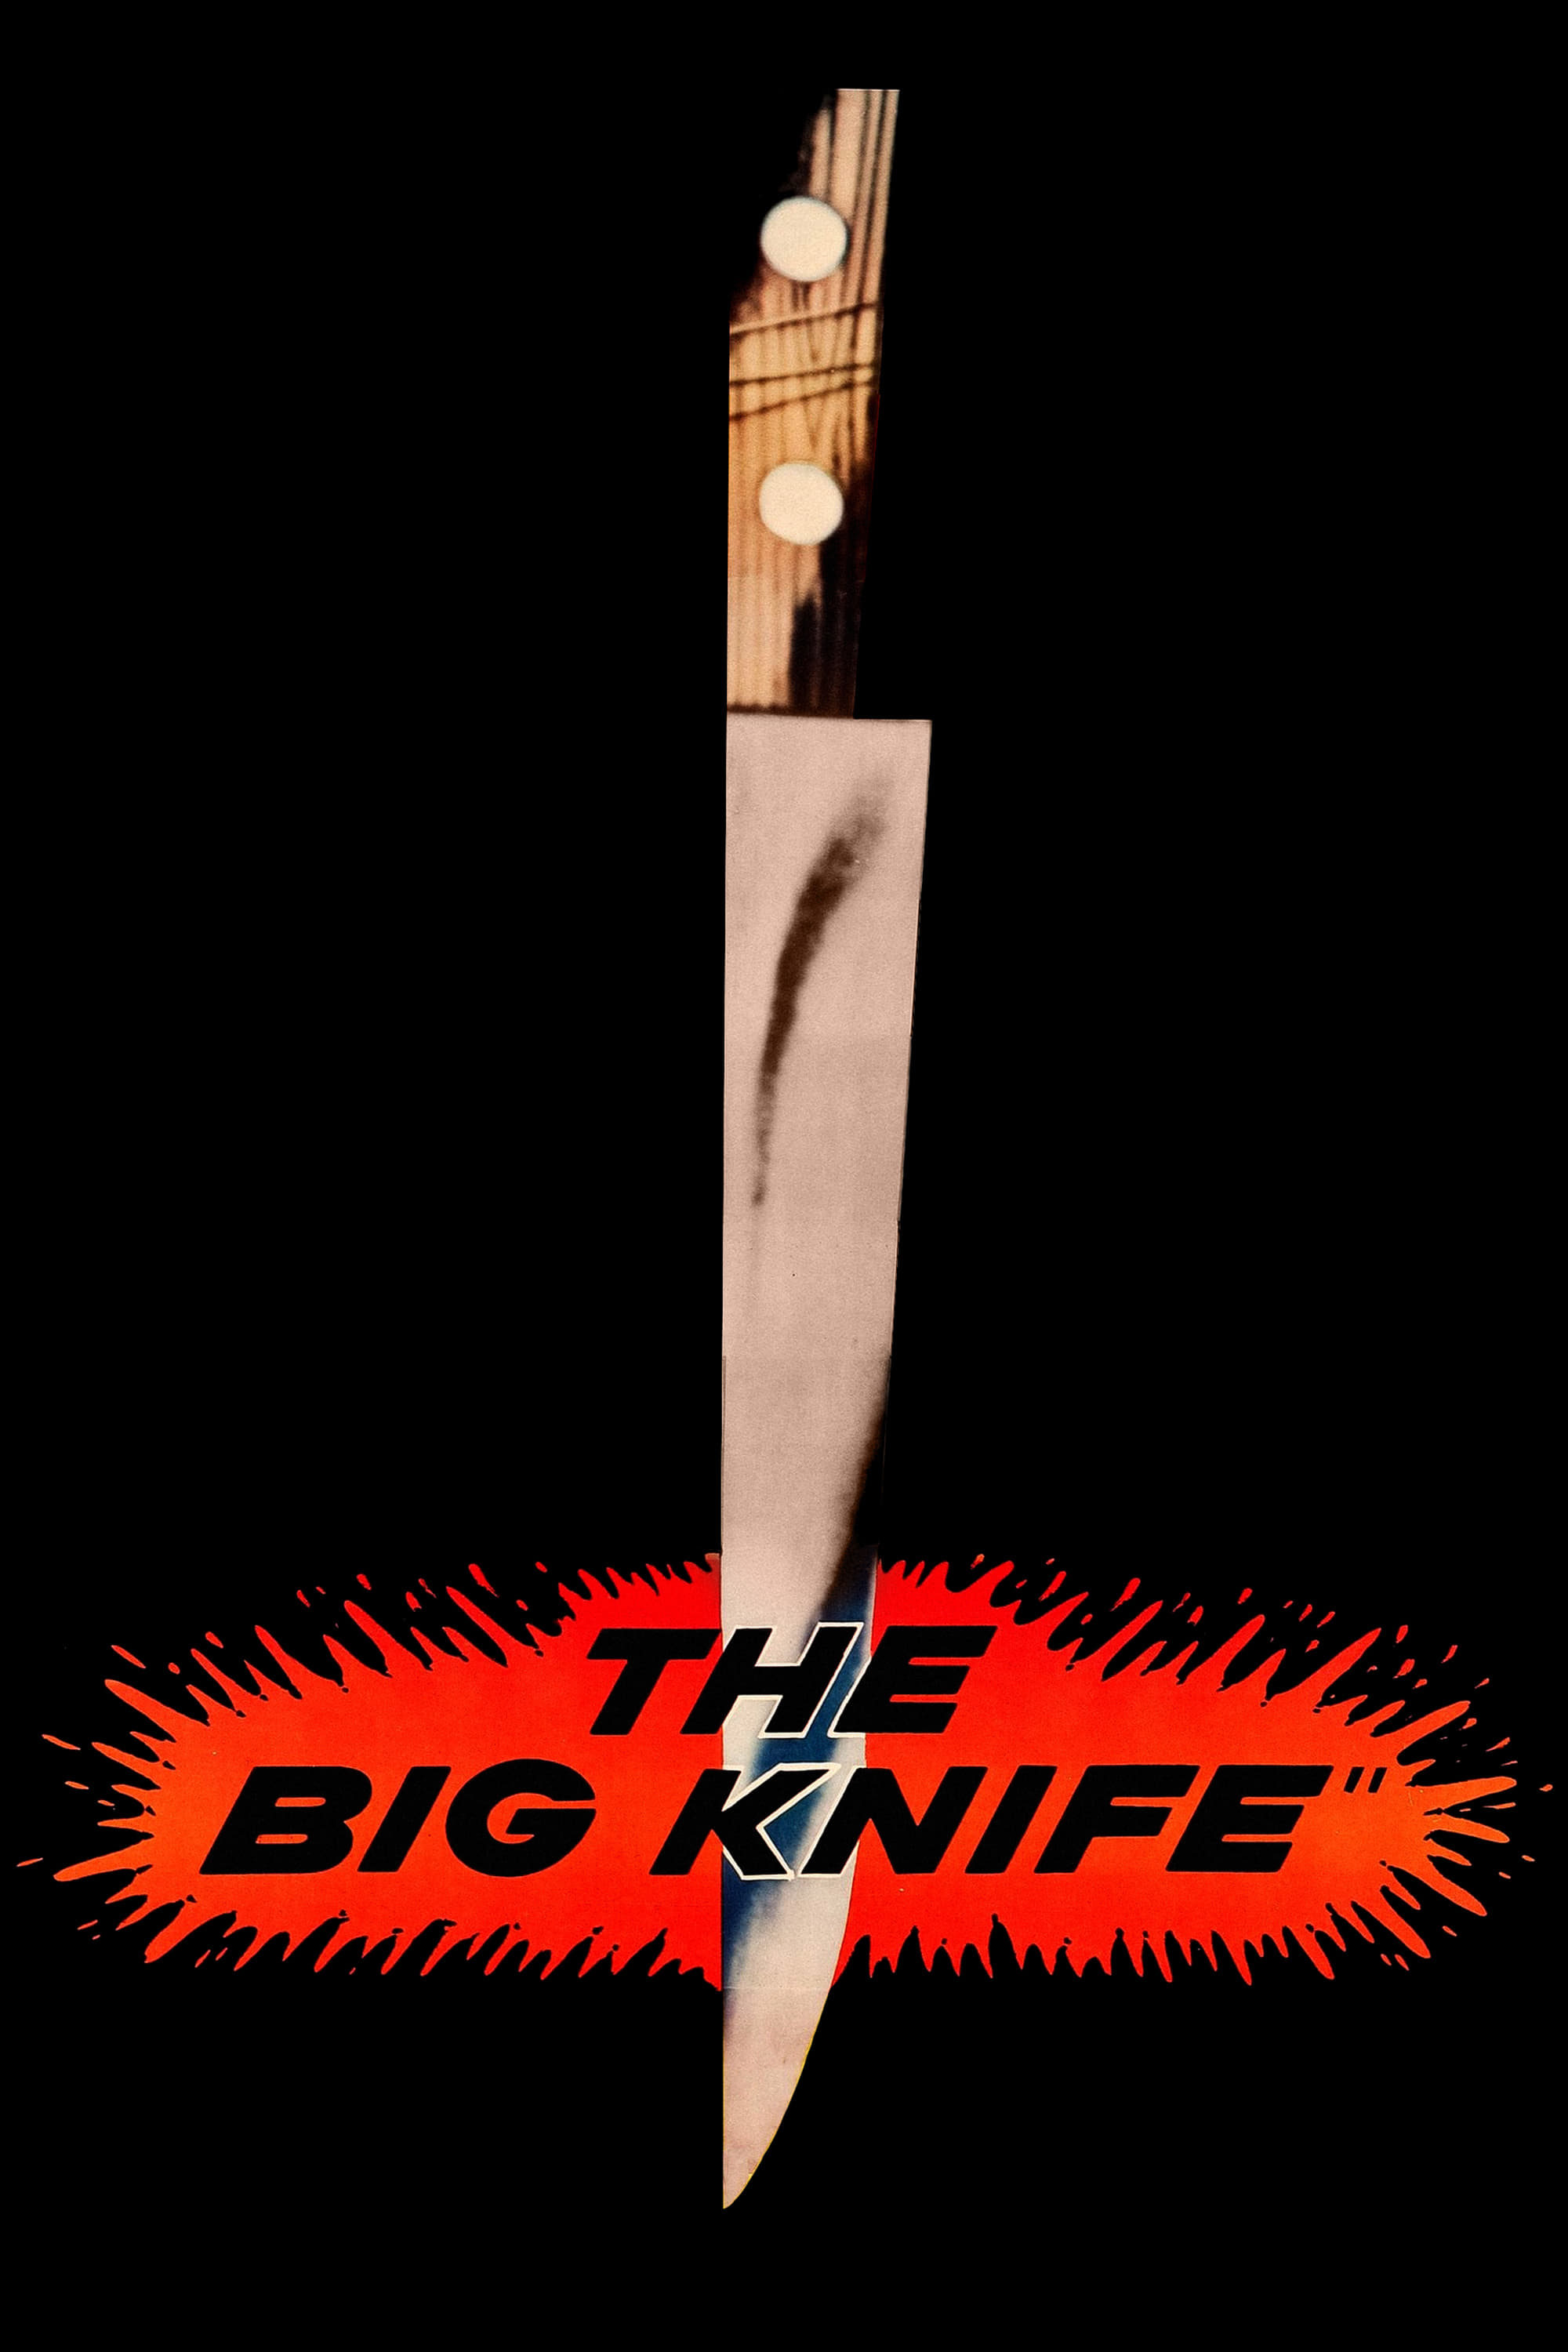 La podadora (El gran cuchillo) (1955)